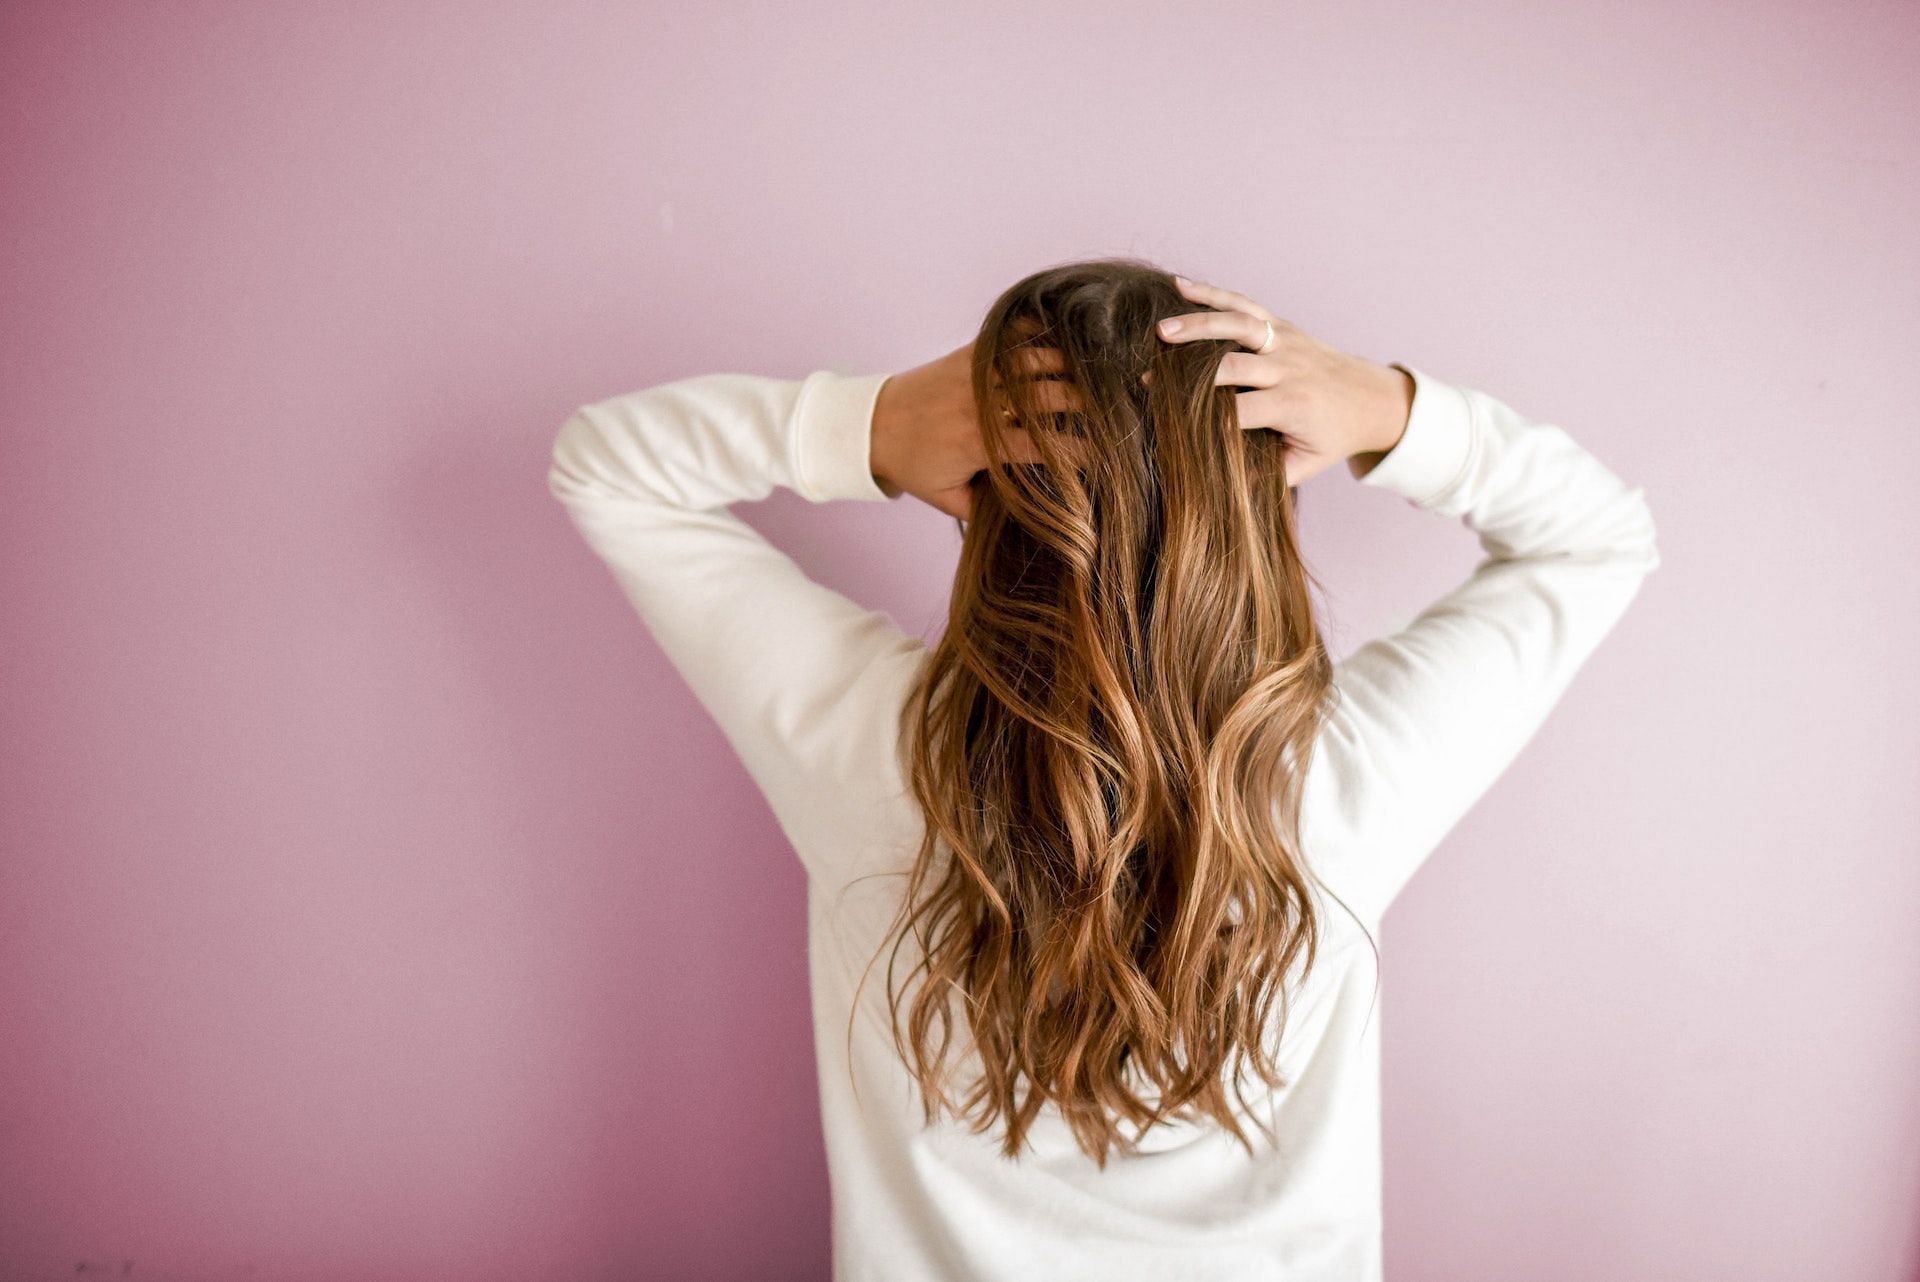 Massaging the scalp can ensure hair regrowth. (Photo via Pexels/Element5 Digital)